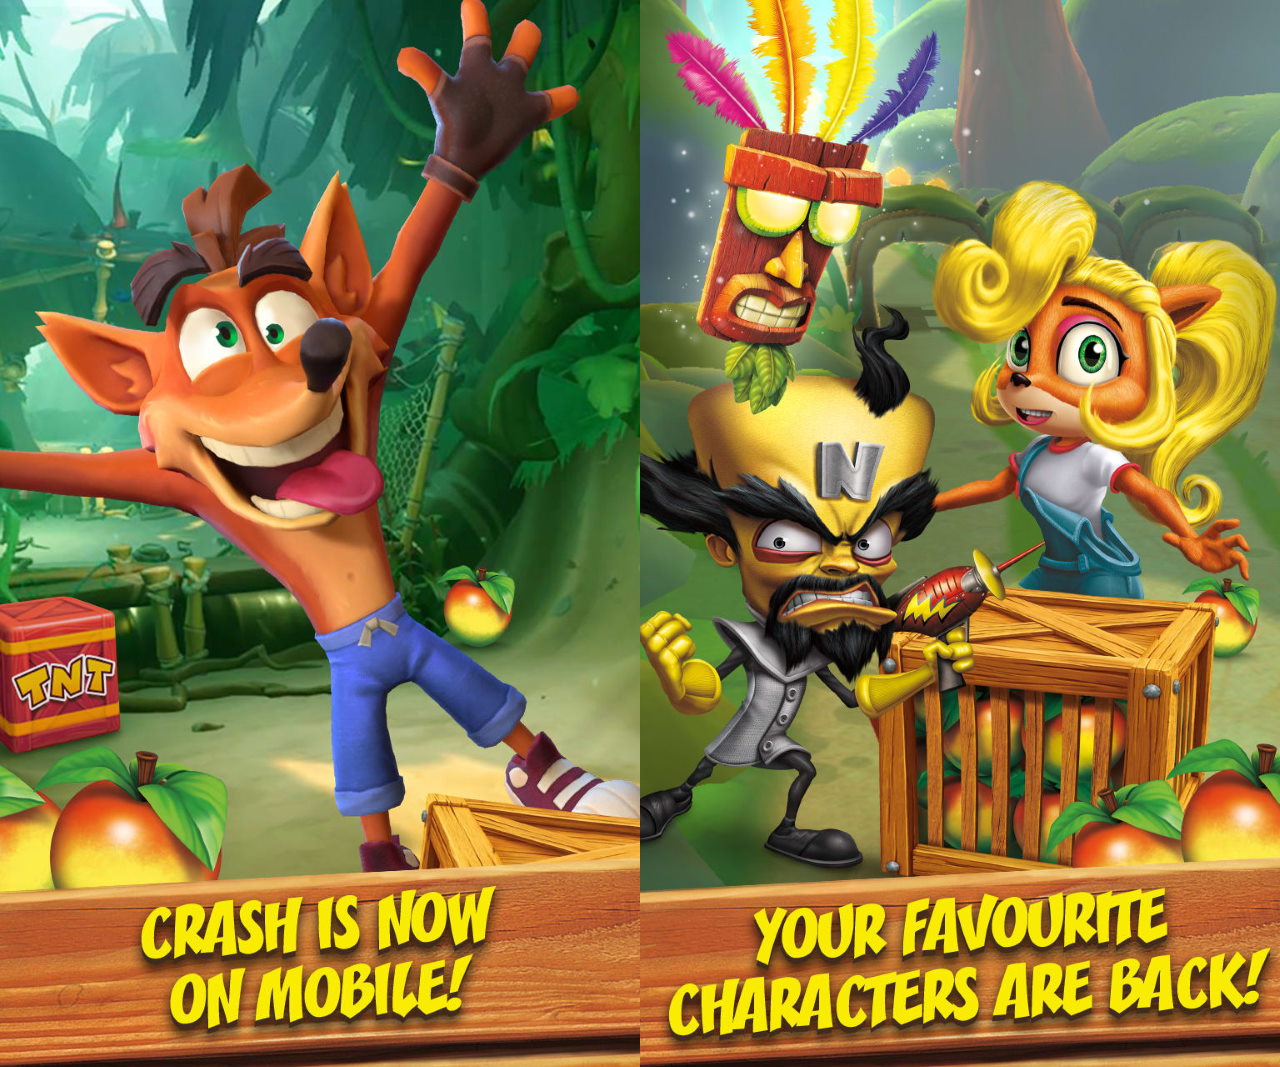 Crash Bandicoot: naik, turun dan masa depannya di Android dengan pencipta Candy Crush